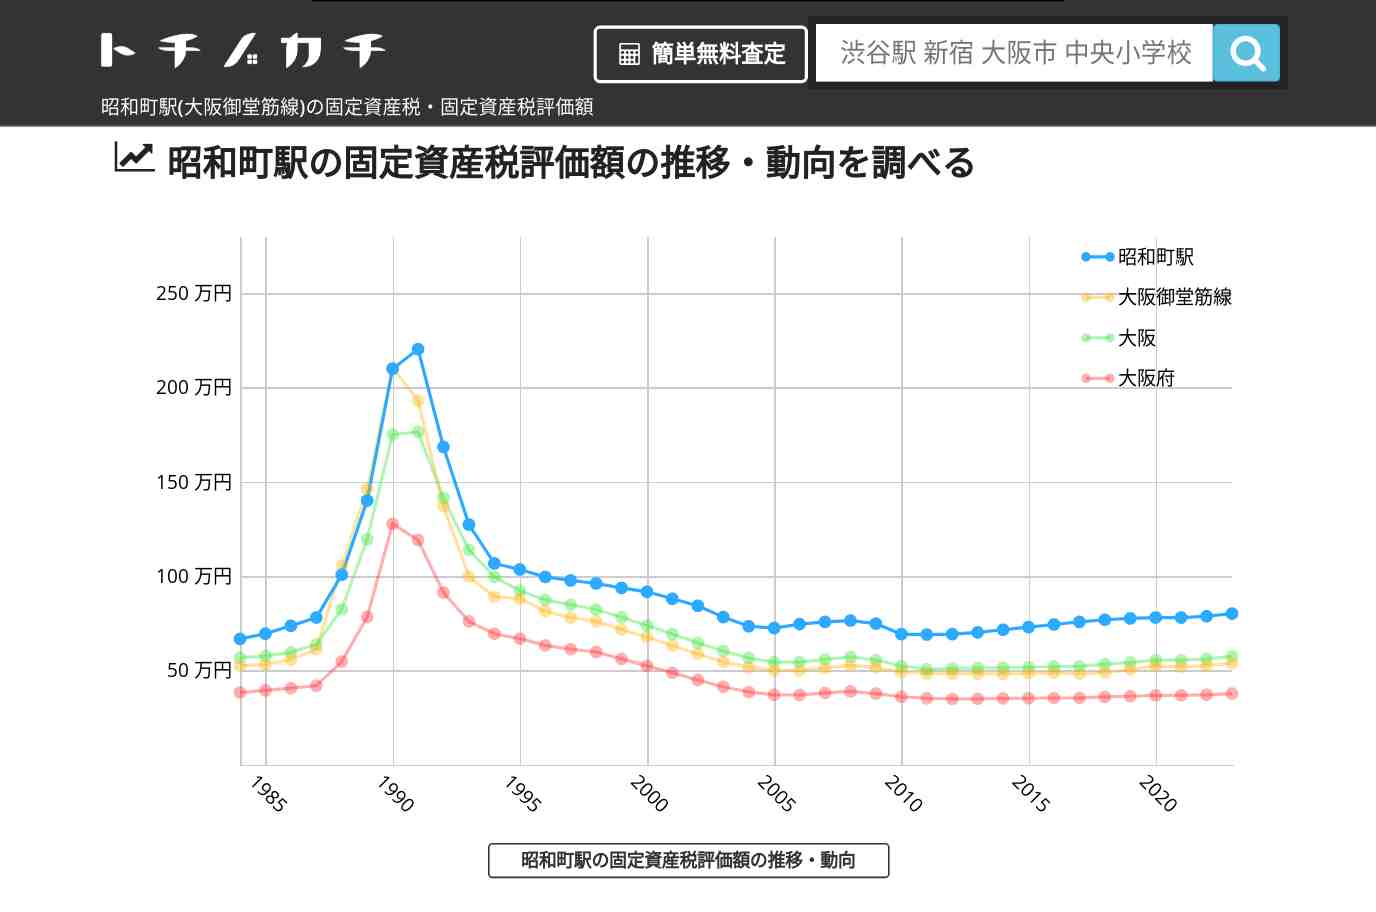 昭和町駅(大阪御堂筋線)の固定資産税・固定資産税評価額 | トチノカチ